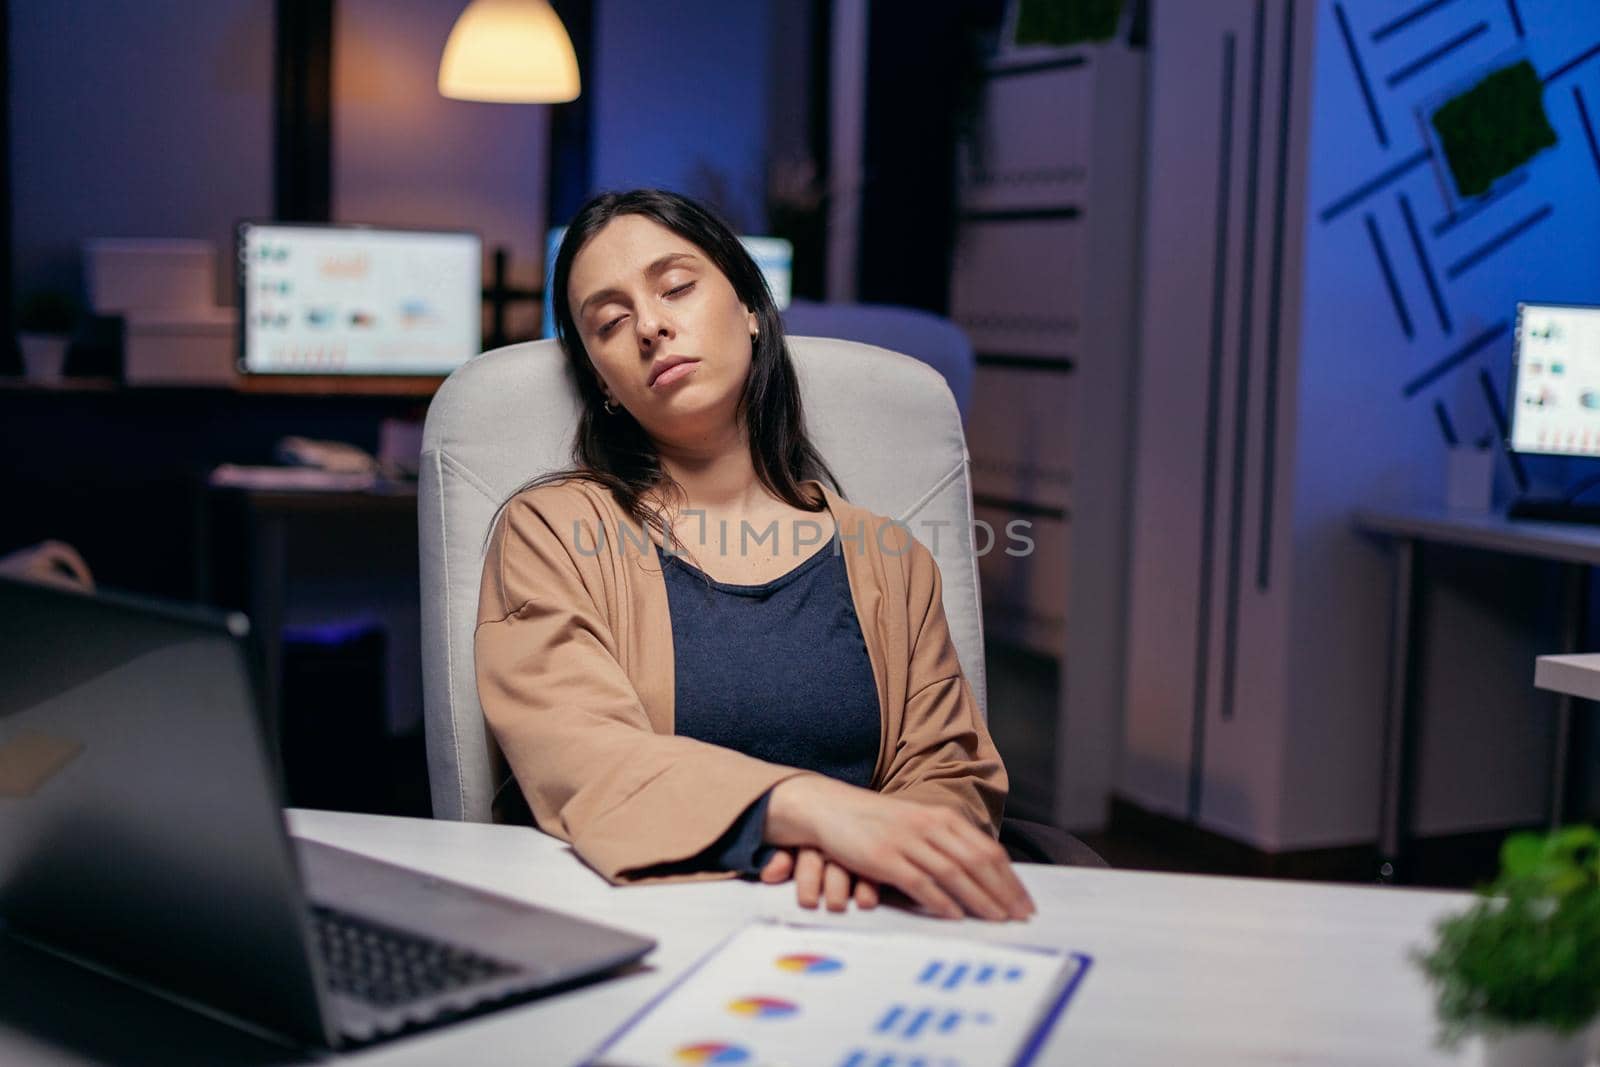 Overworked stressed woman sleeping by DCStudio